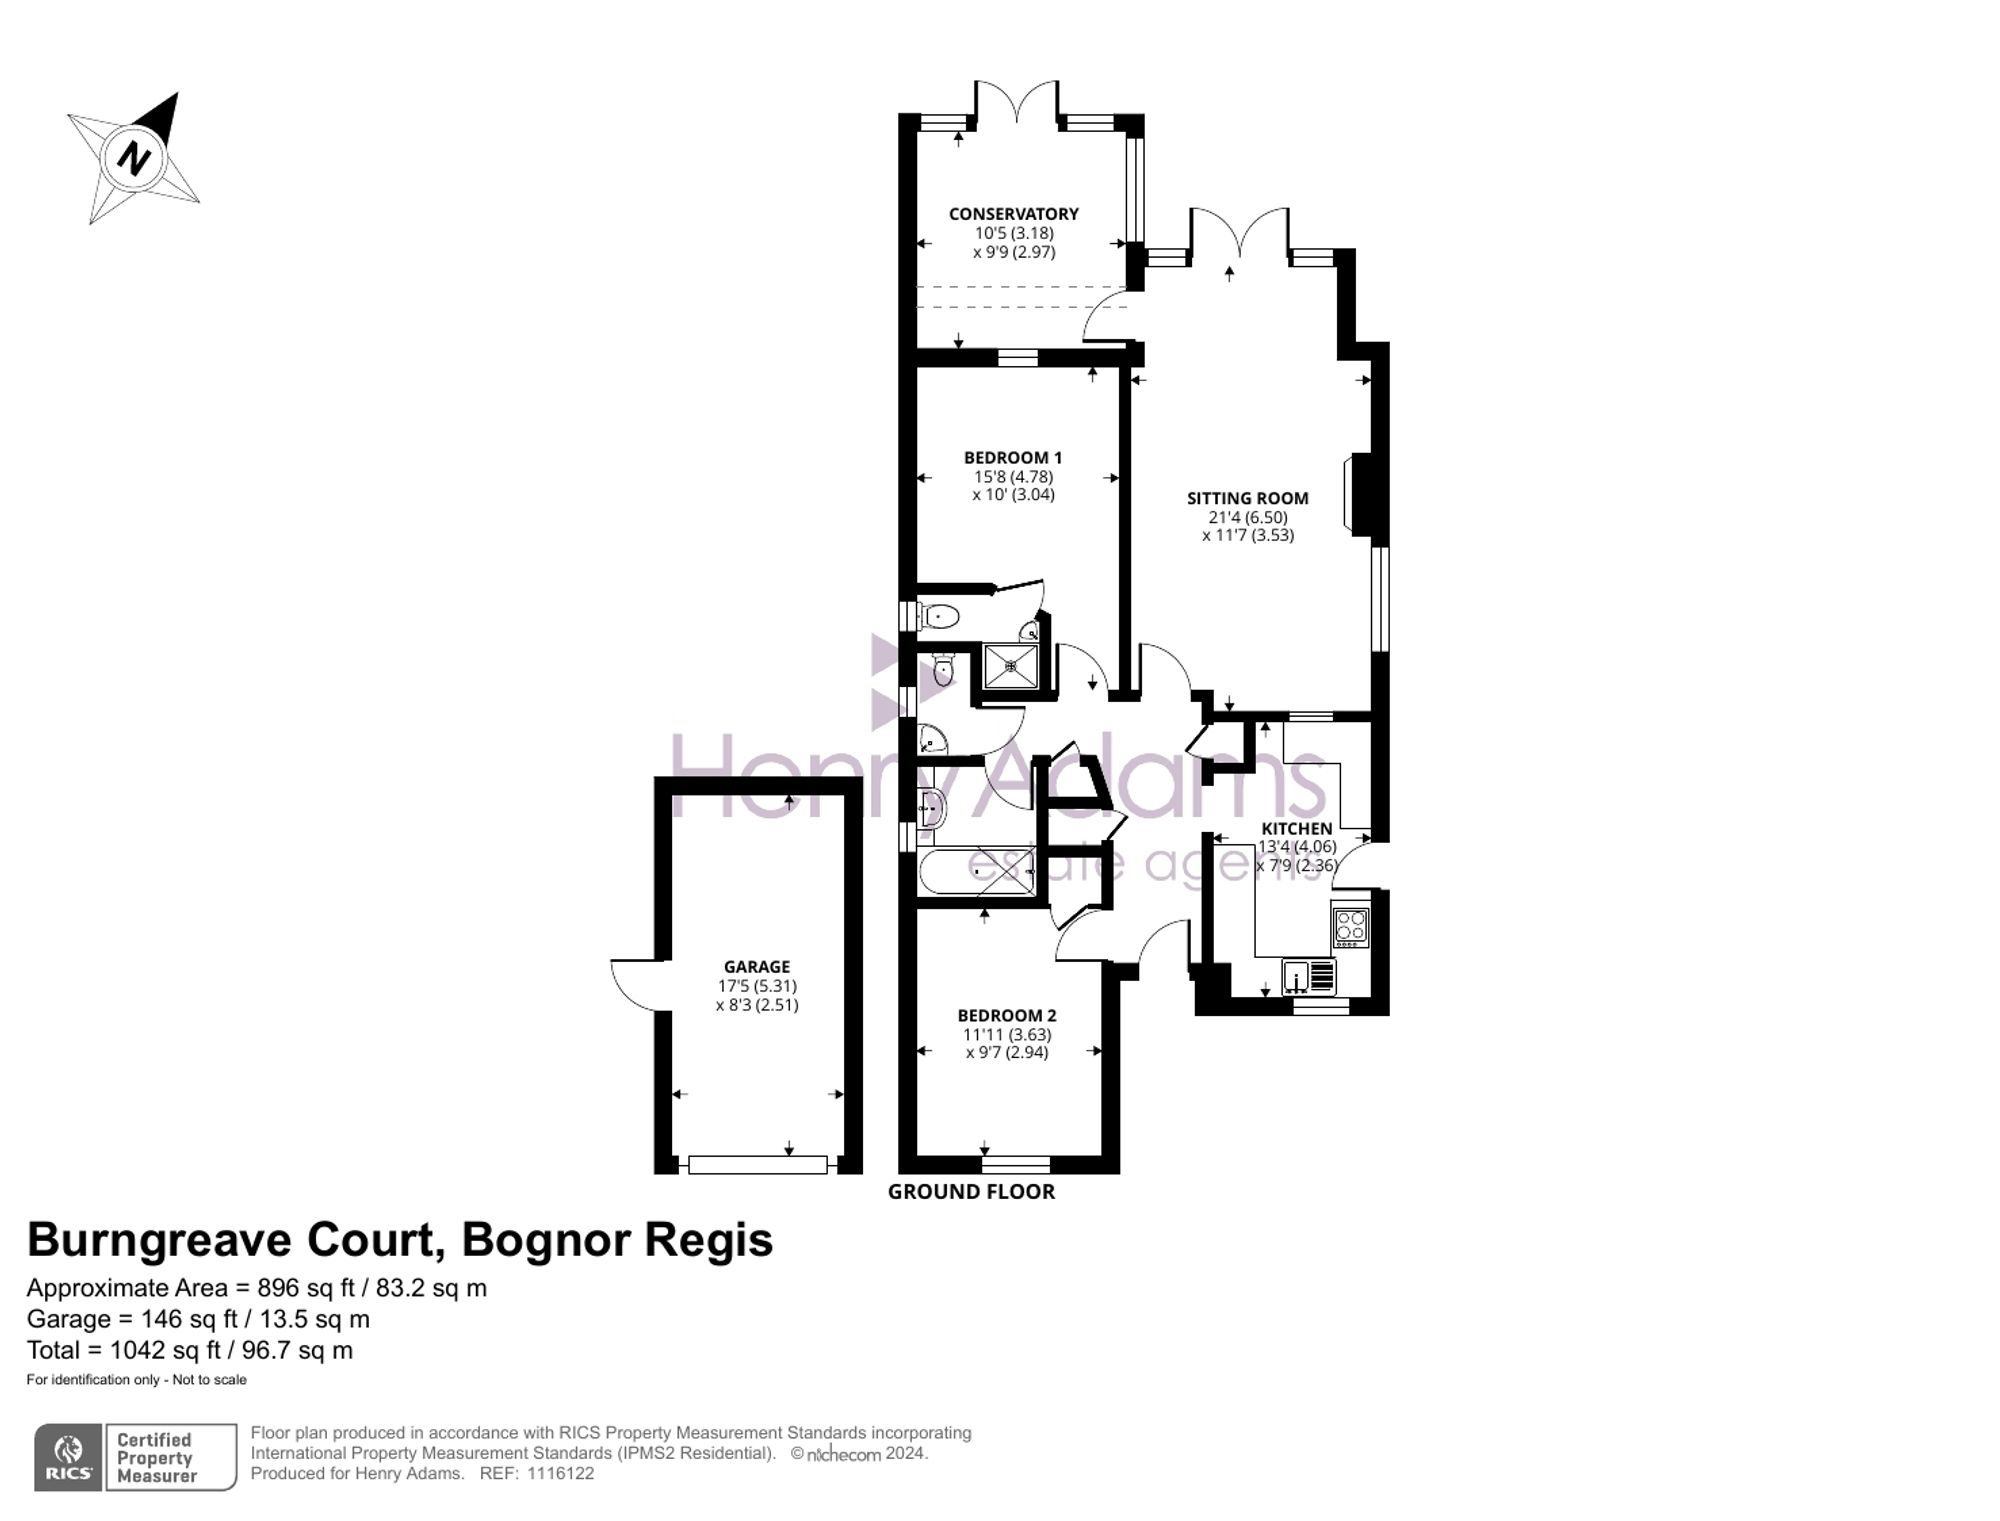 Burngreave Court, Bognor Regis, PO21 floorplans